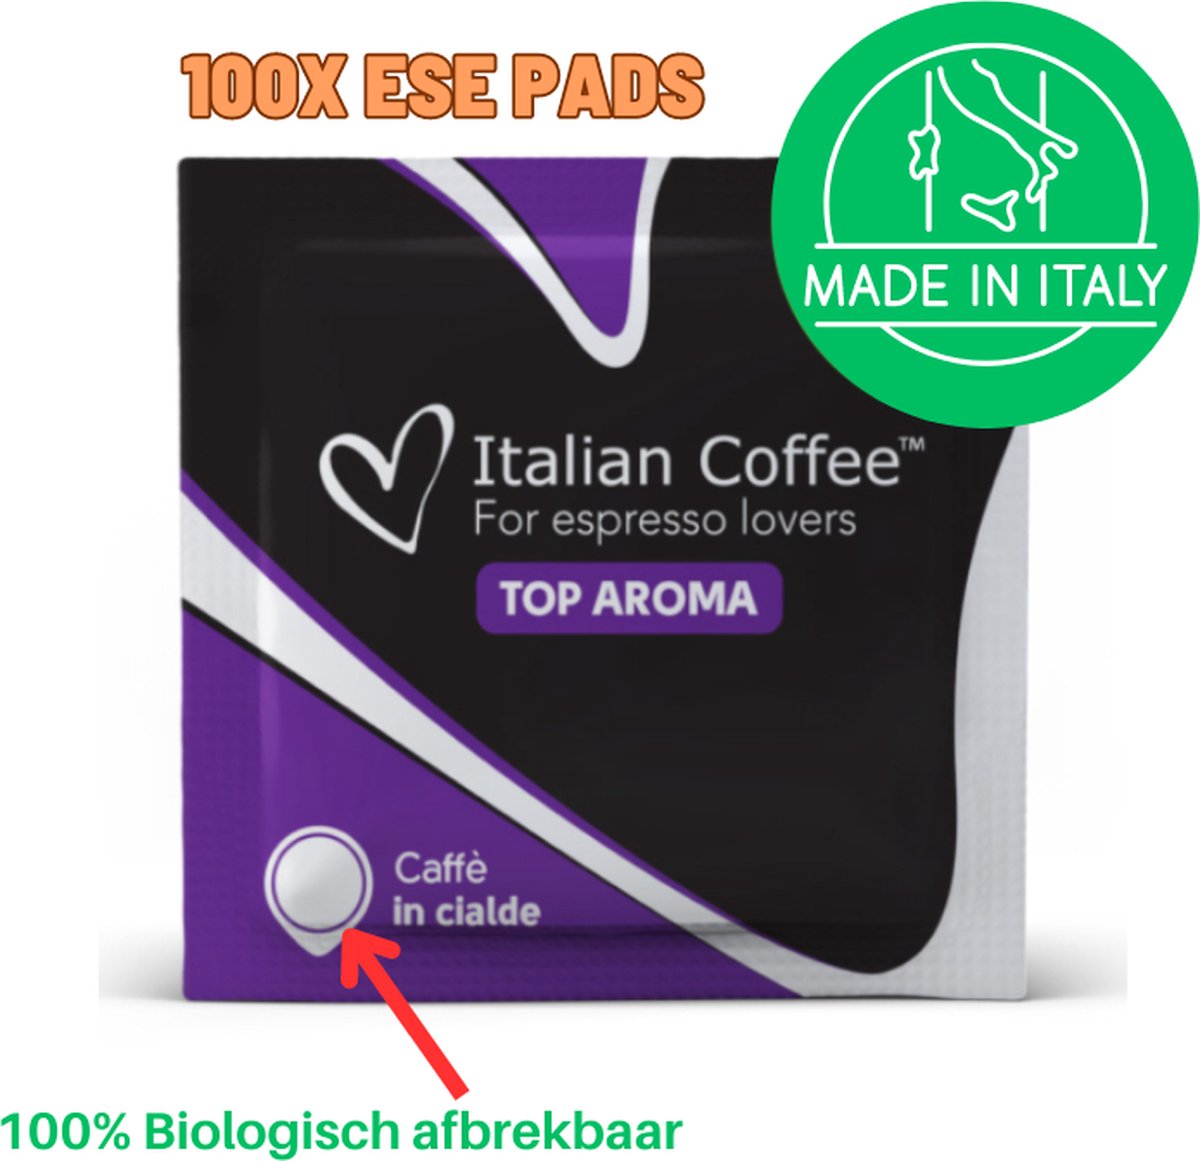 Italian Coffee - Top Aroma espresso - 100x ESE 44mm Koffiepads